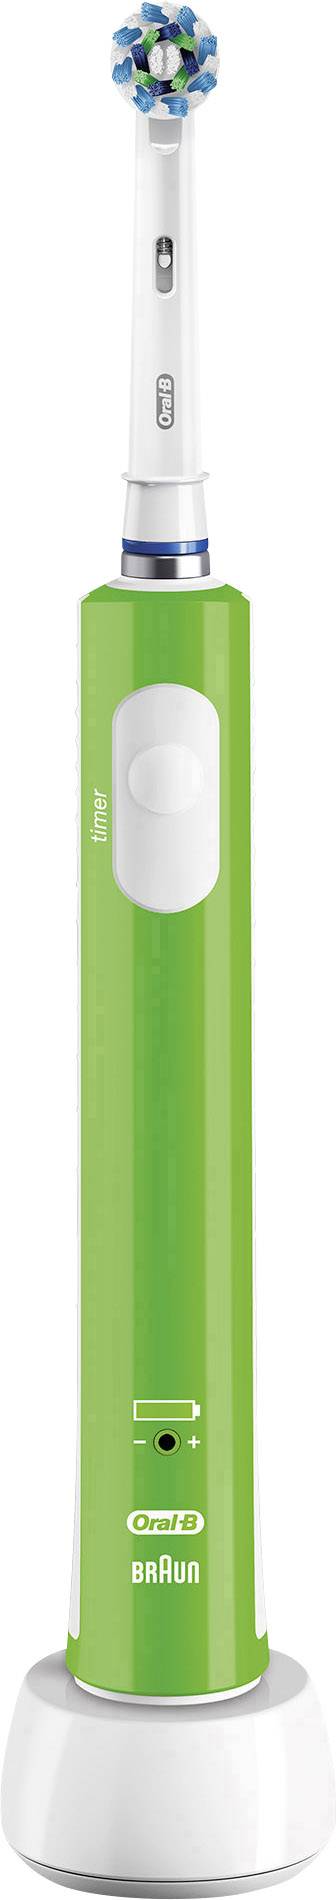 Oral-B Pro 600 Cross Action green Pro 600 Action green toothbrush Rotating/vibrating | Conrad.com